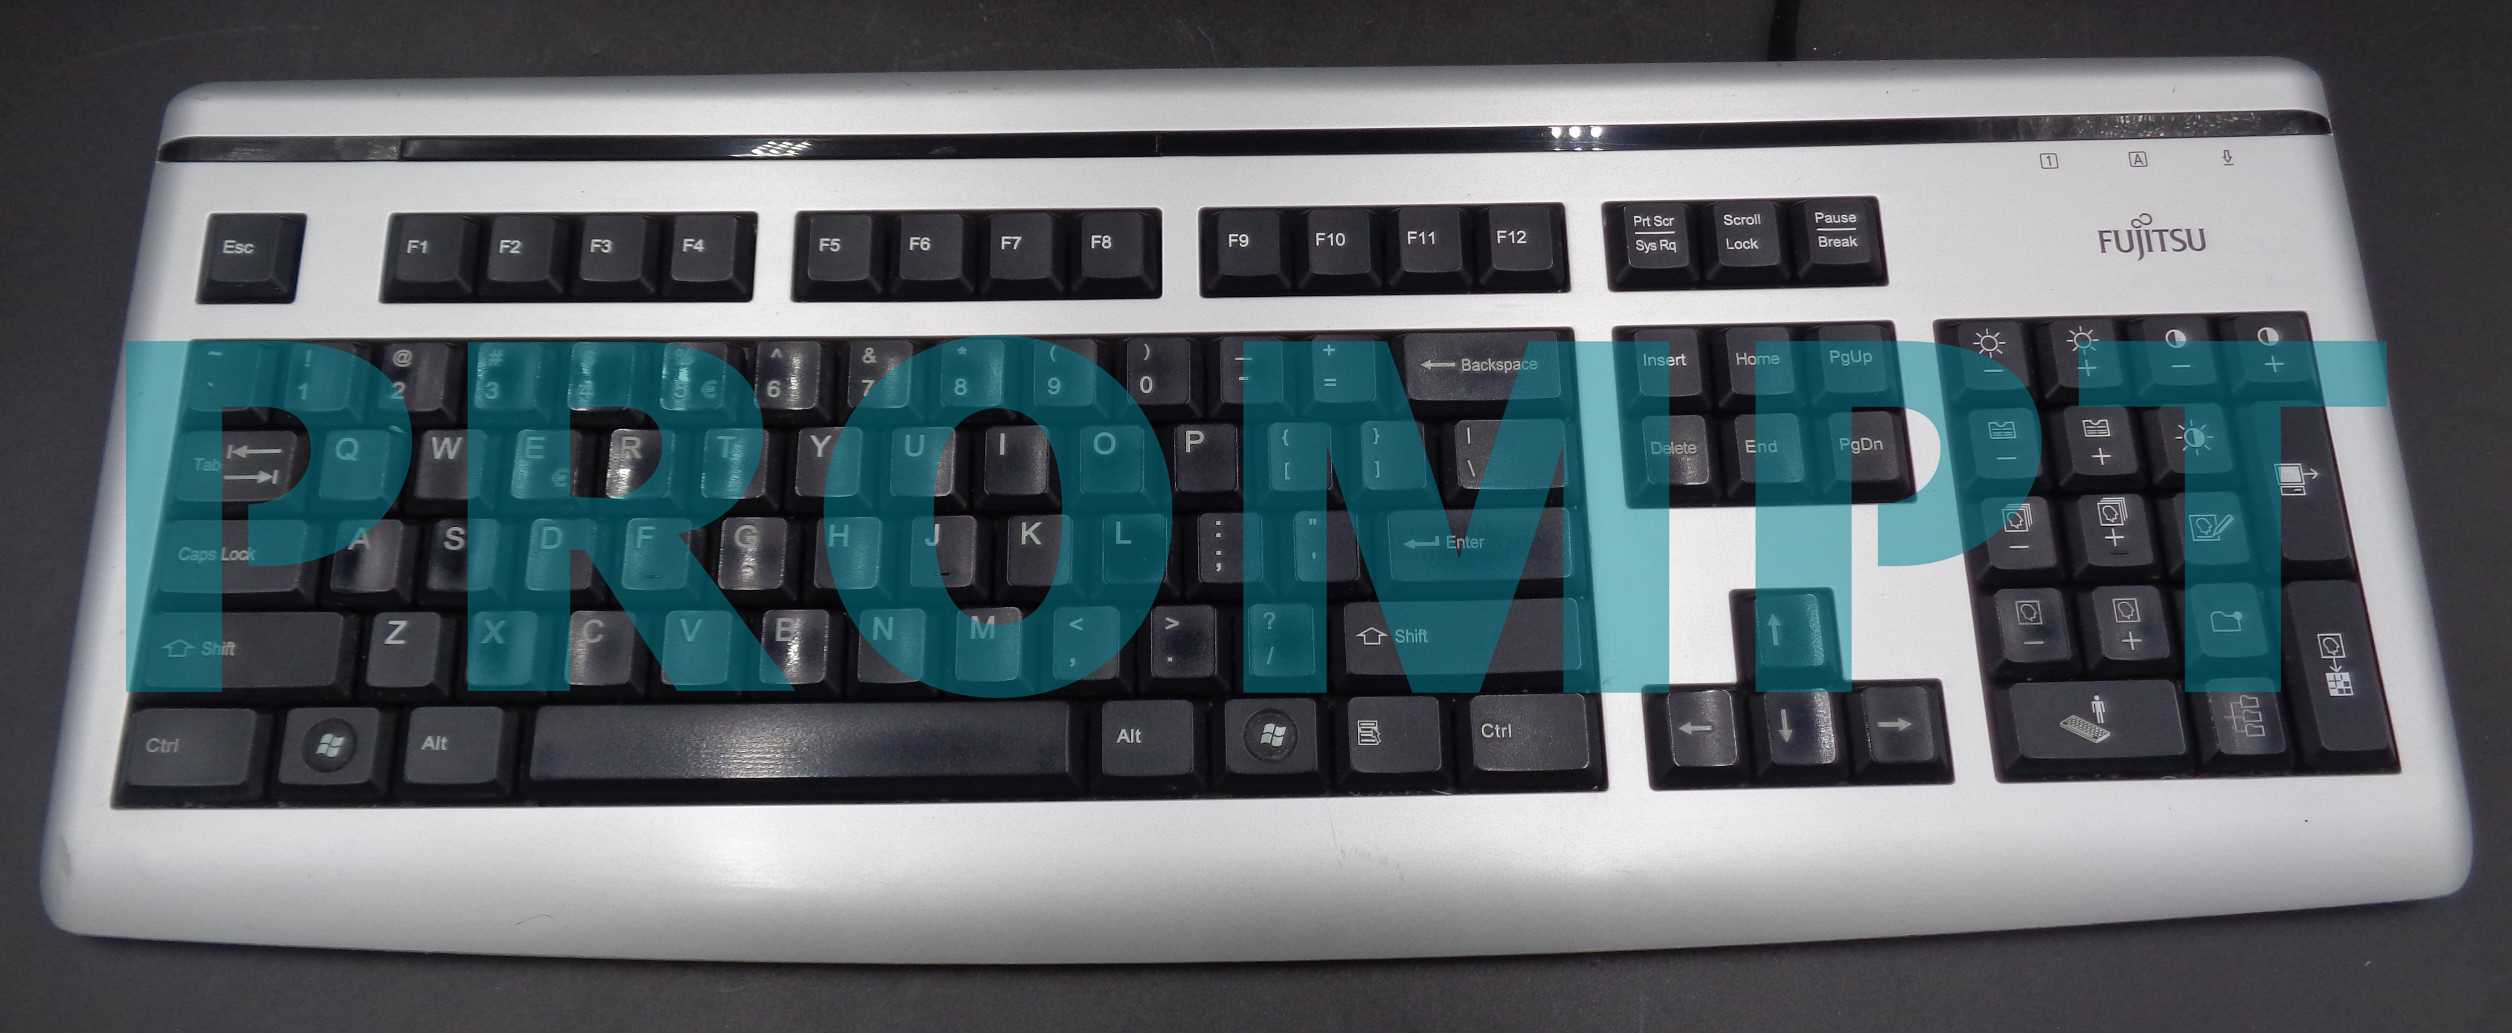 PC-Keyboard USA USB